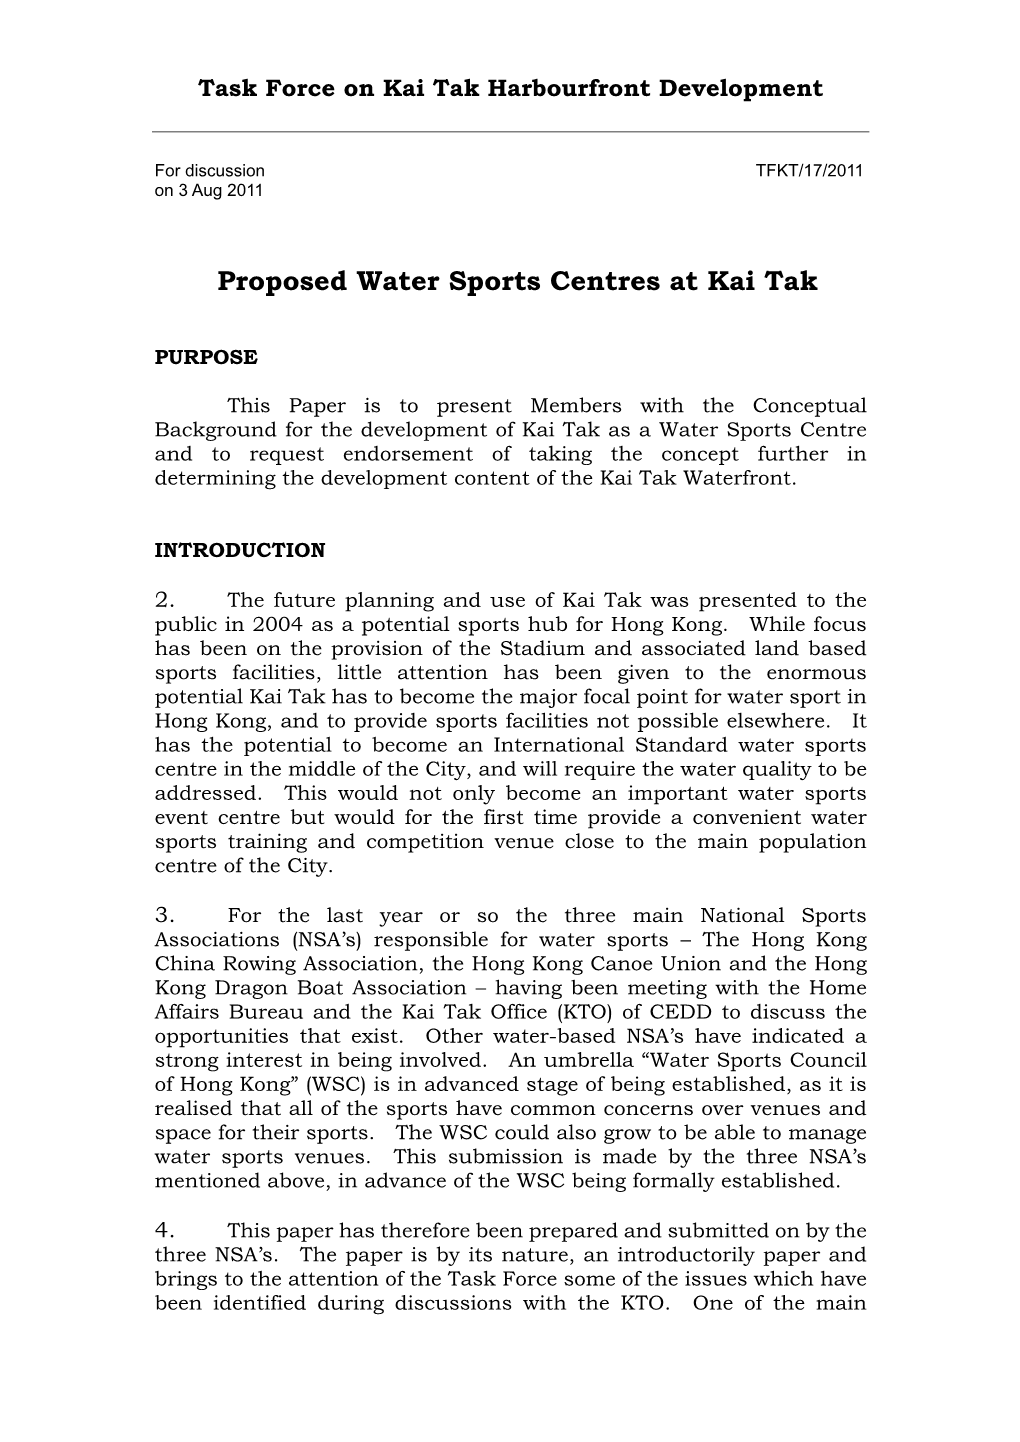 Proposed Water Sports Centres at Kai Tak